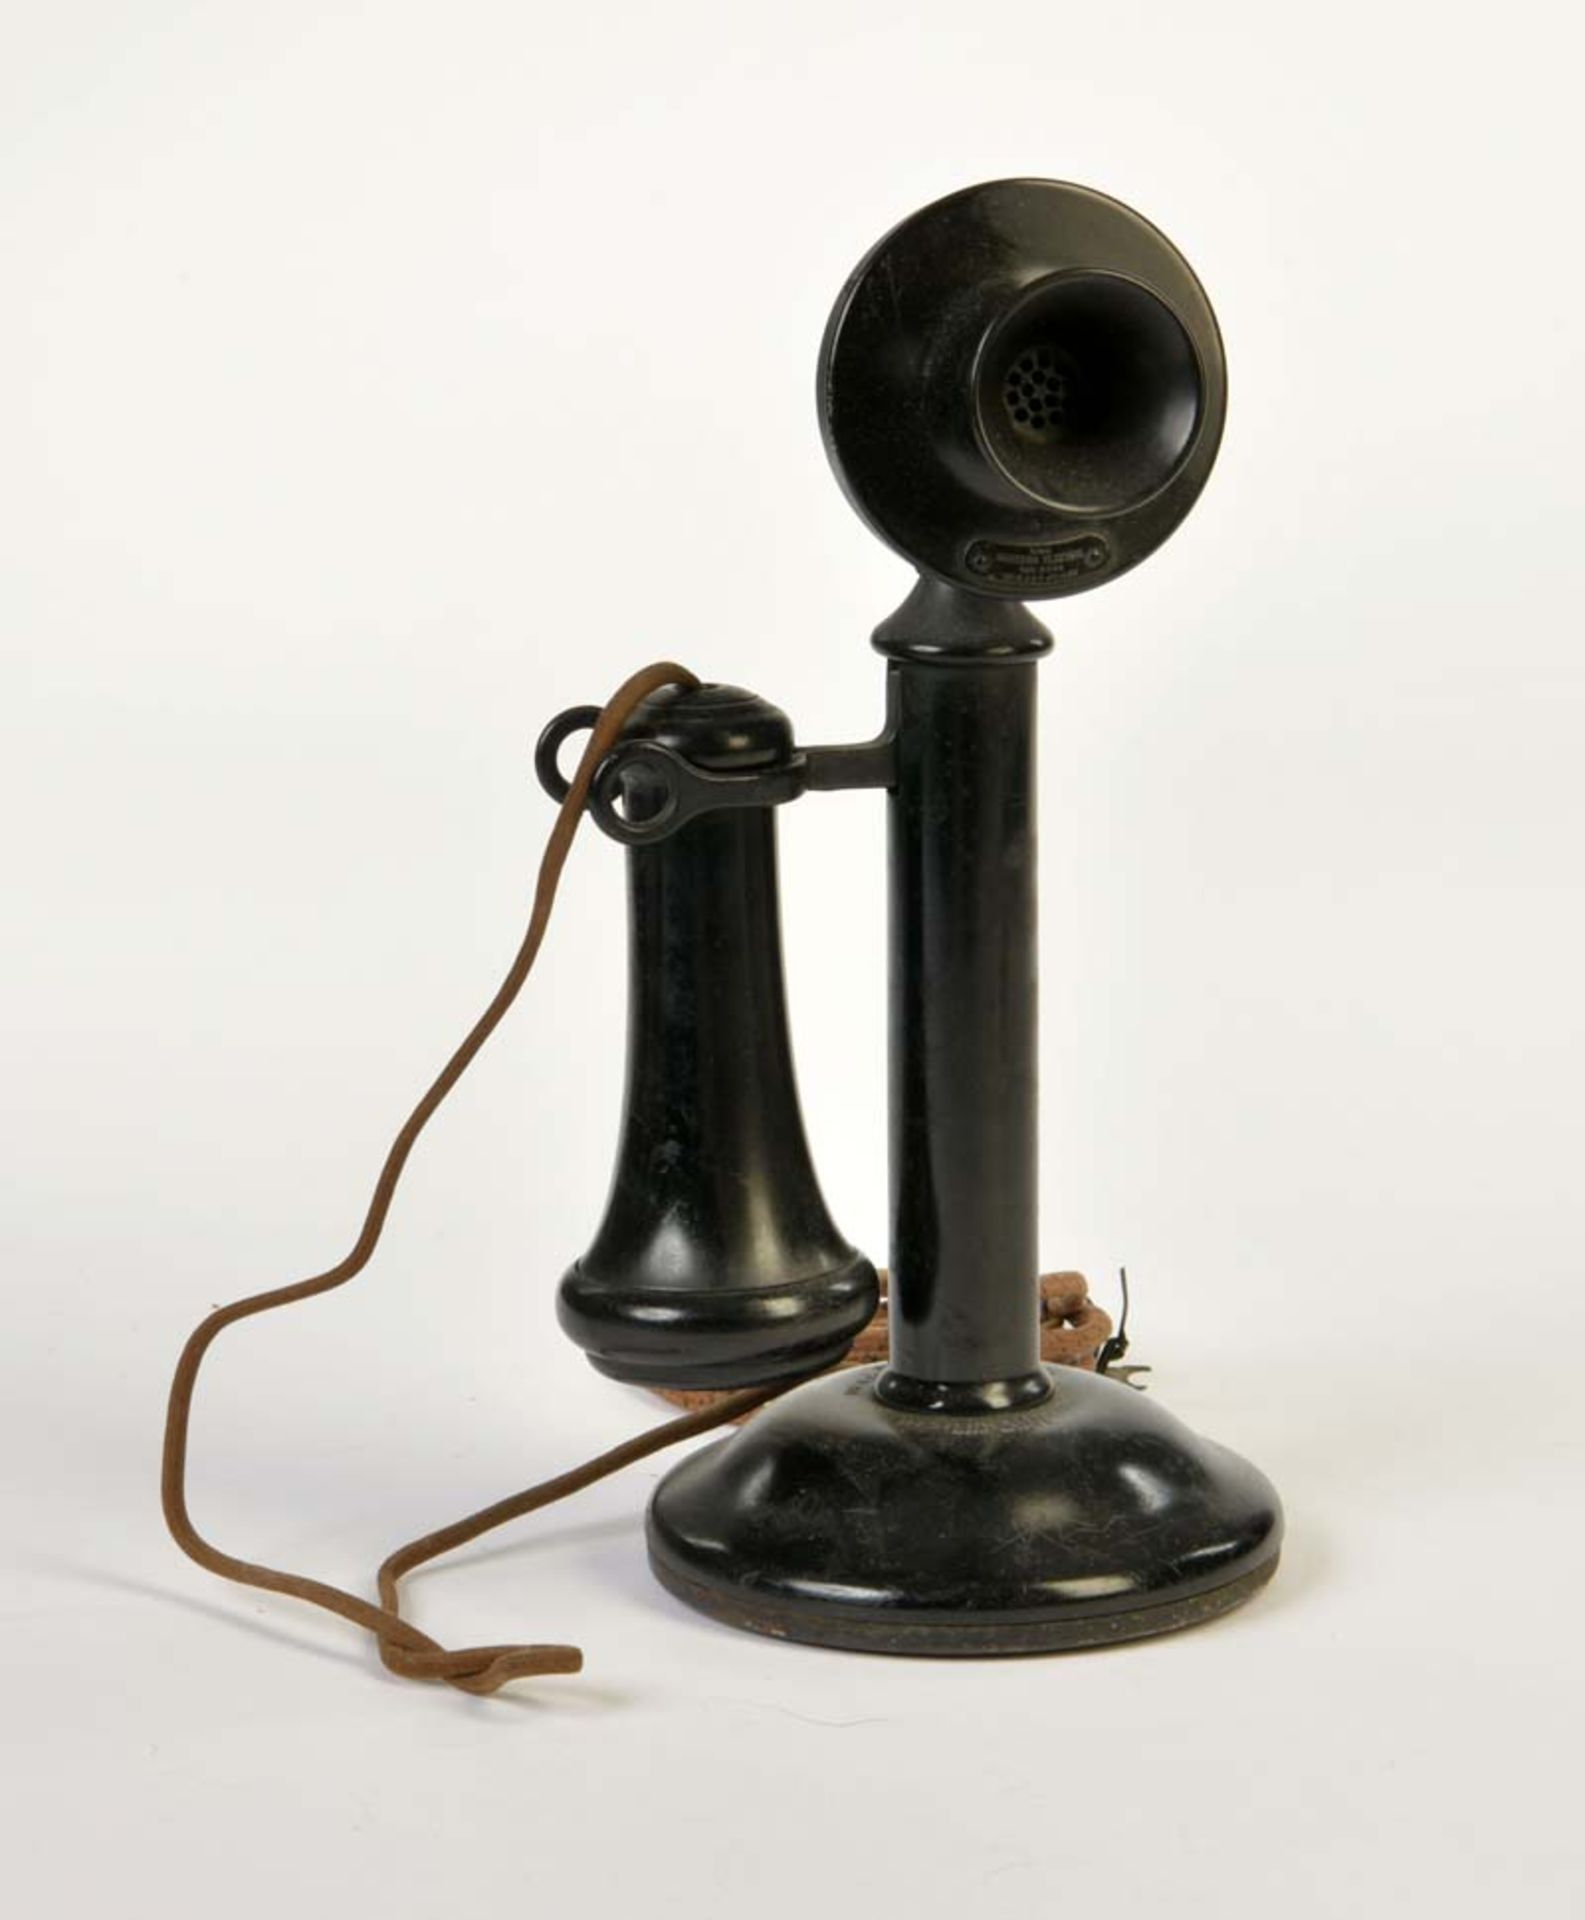 Western Electric, Telefon (1904-1915), USA, 30 cm, Blech